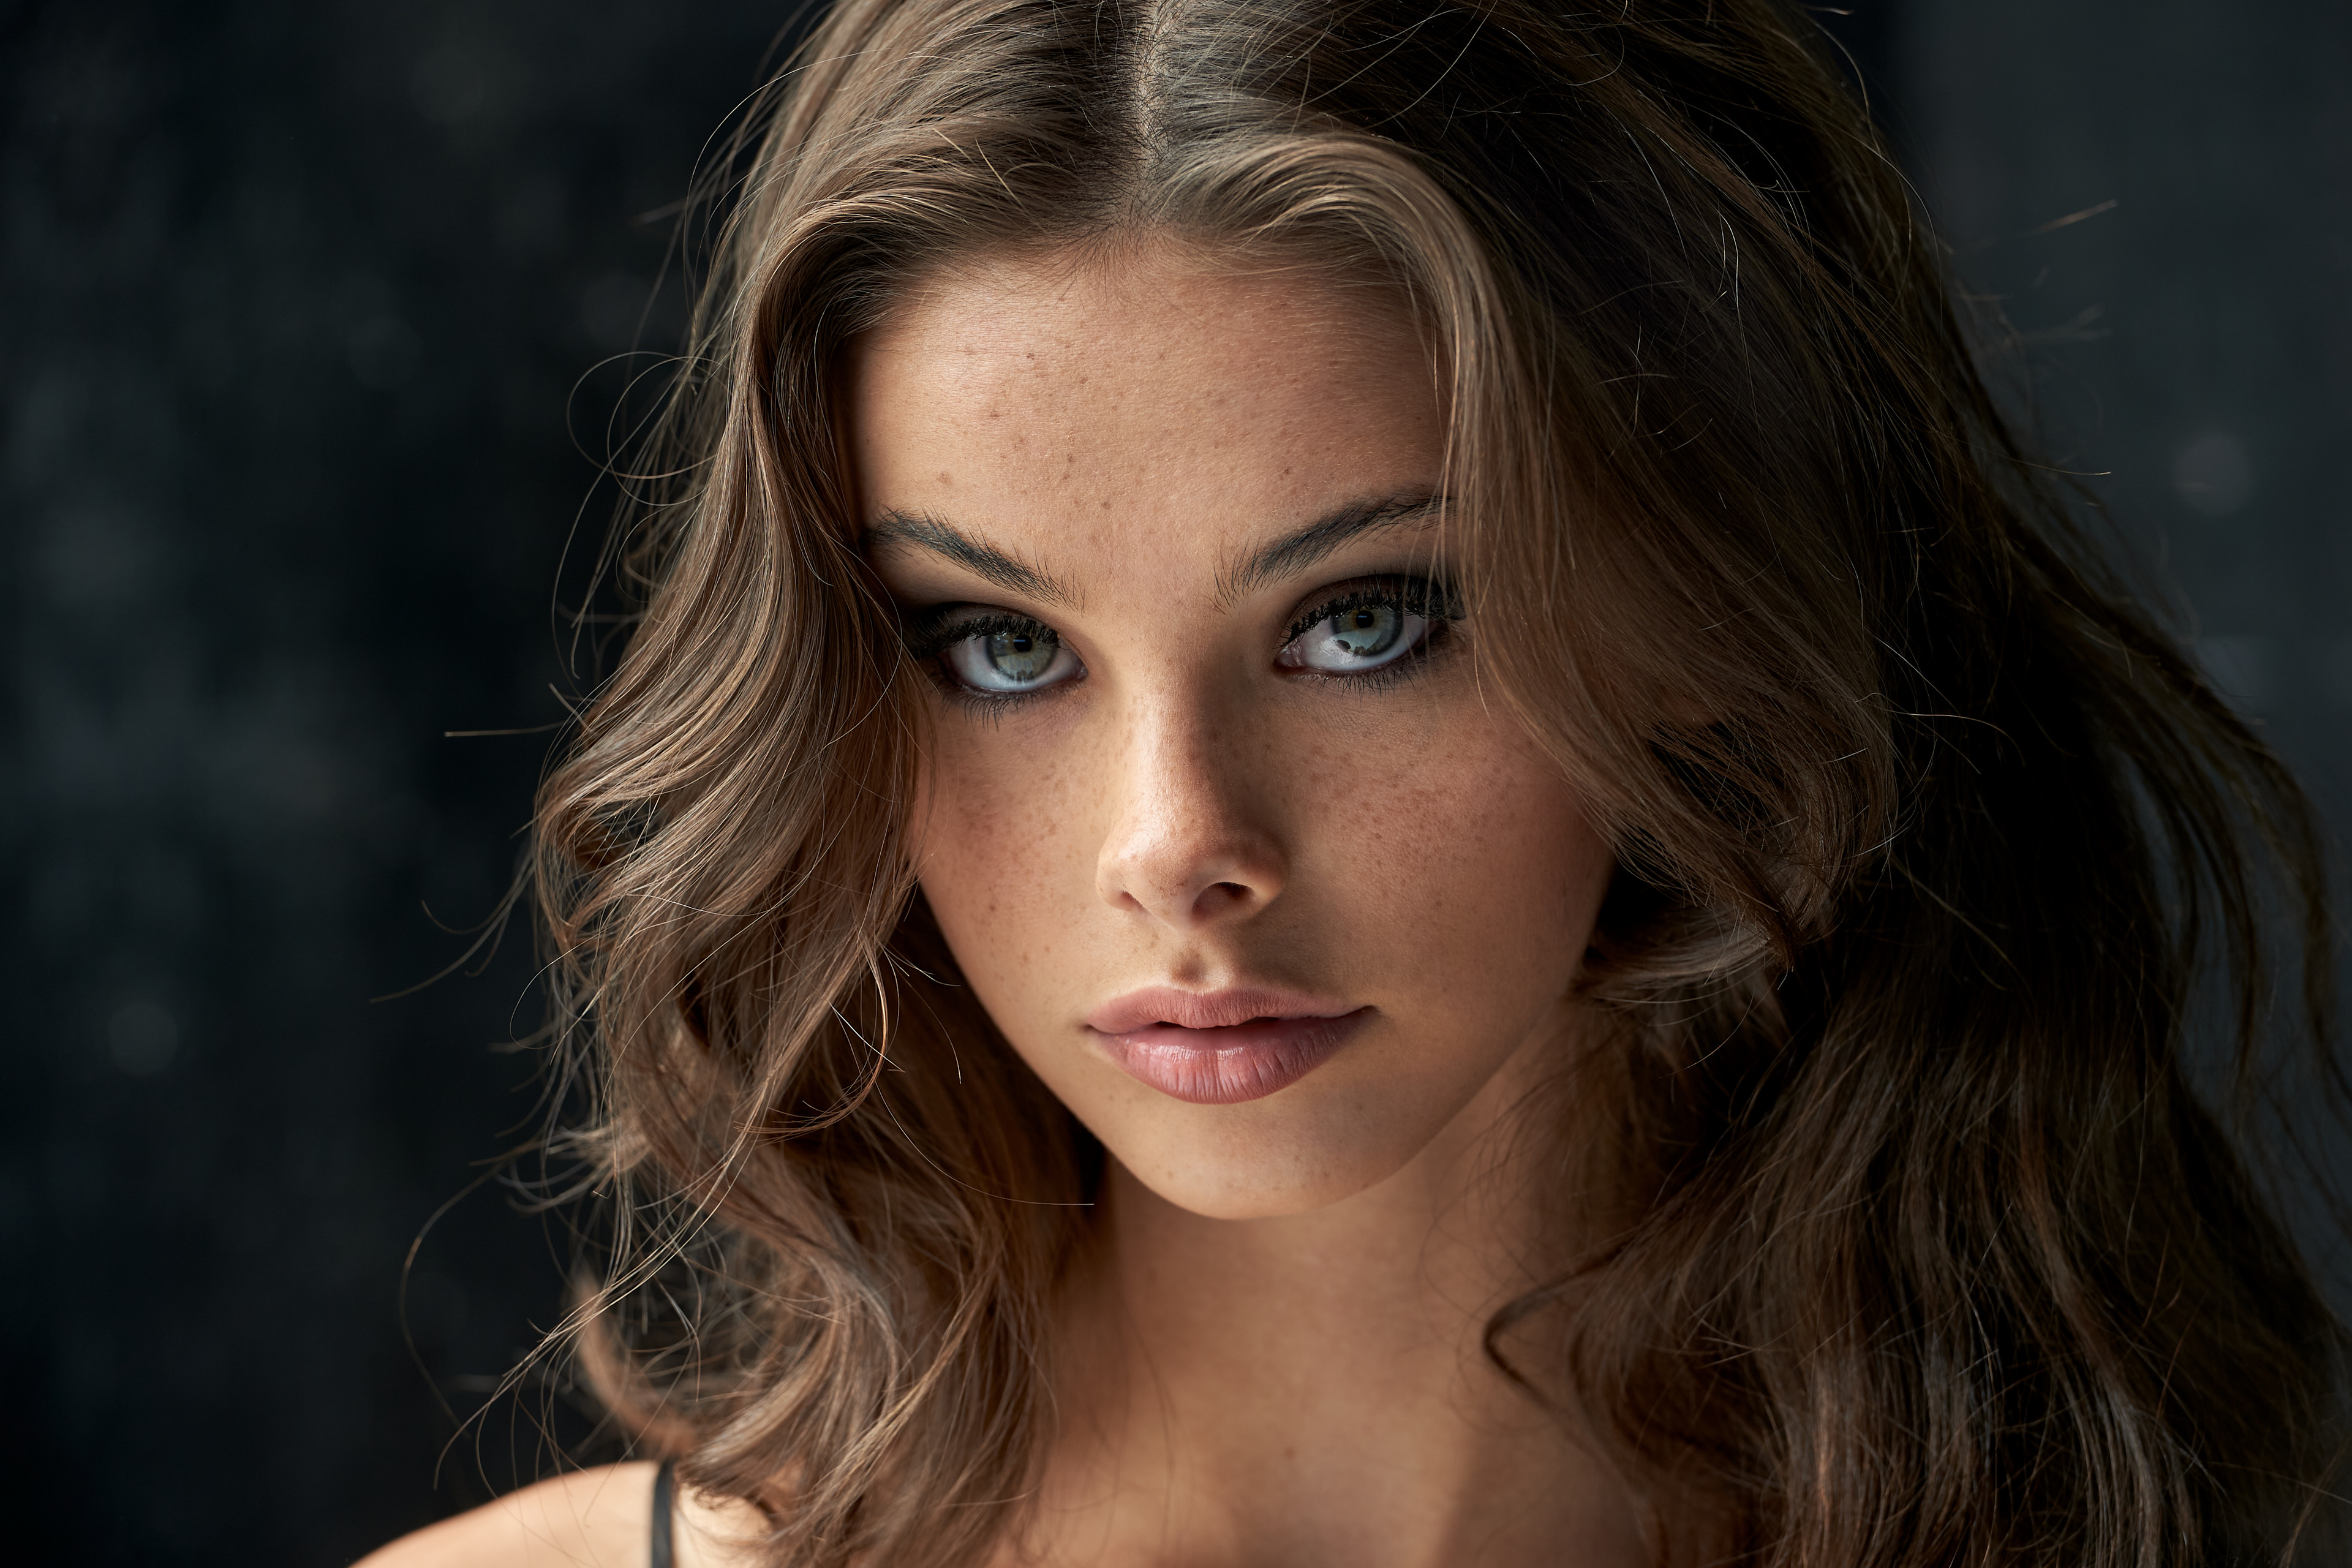 People 3840x2560 Meika Woollard model women makeup face portrait dark background freckles closeup